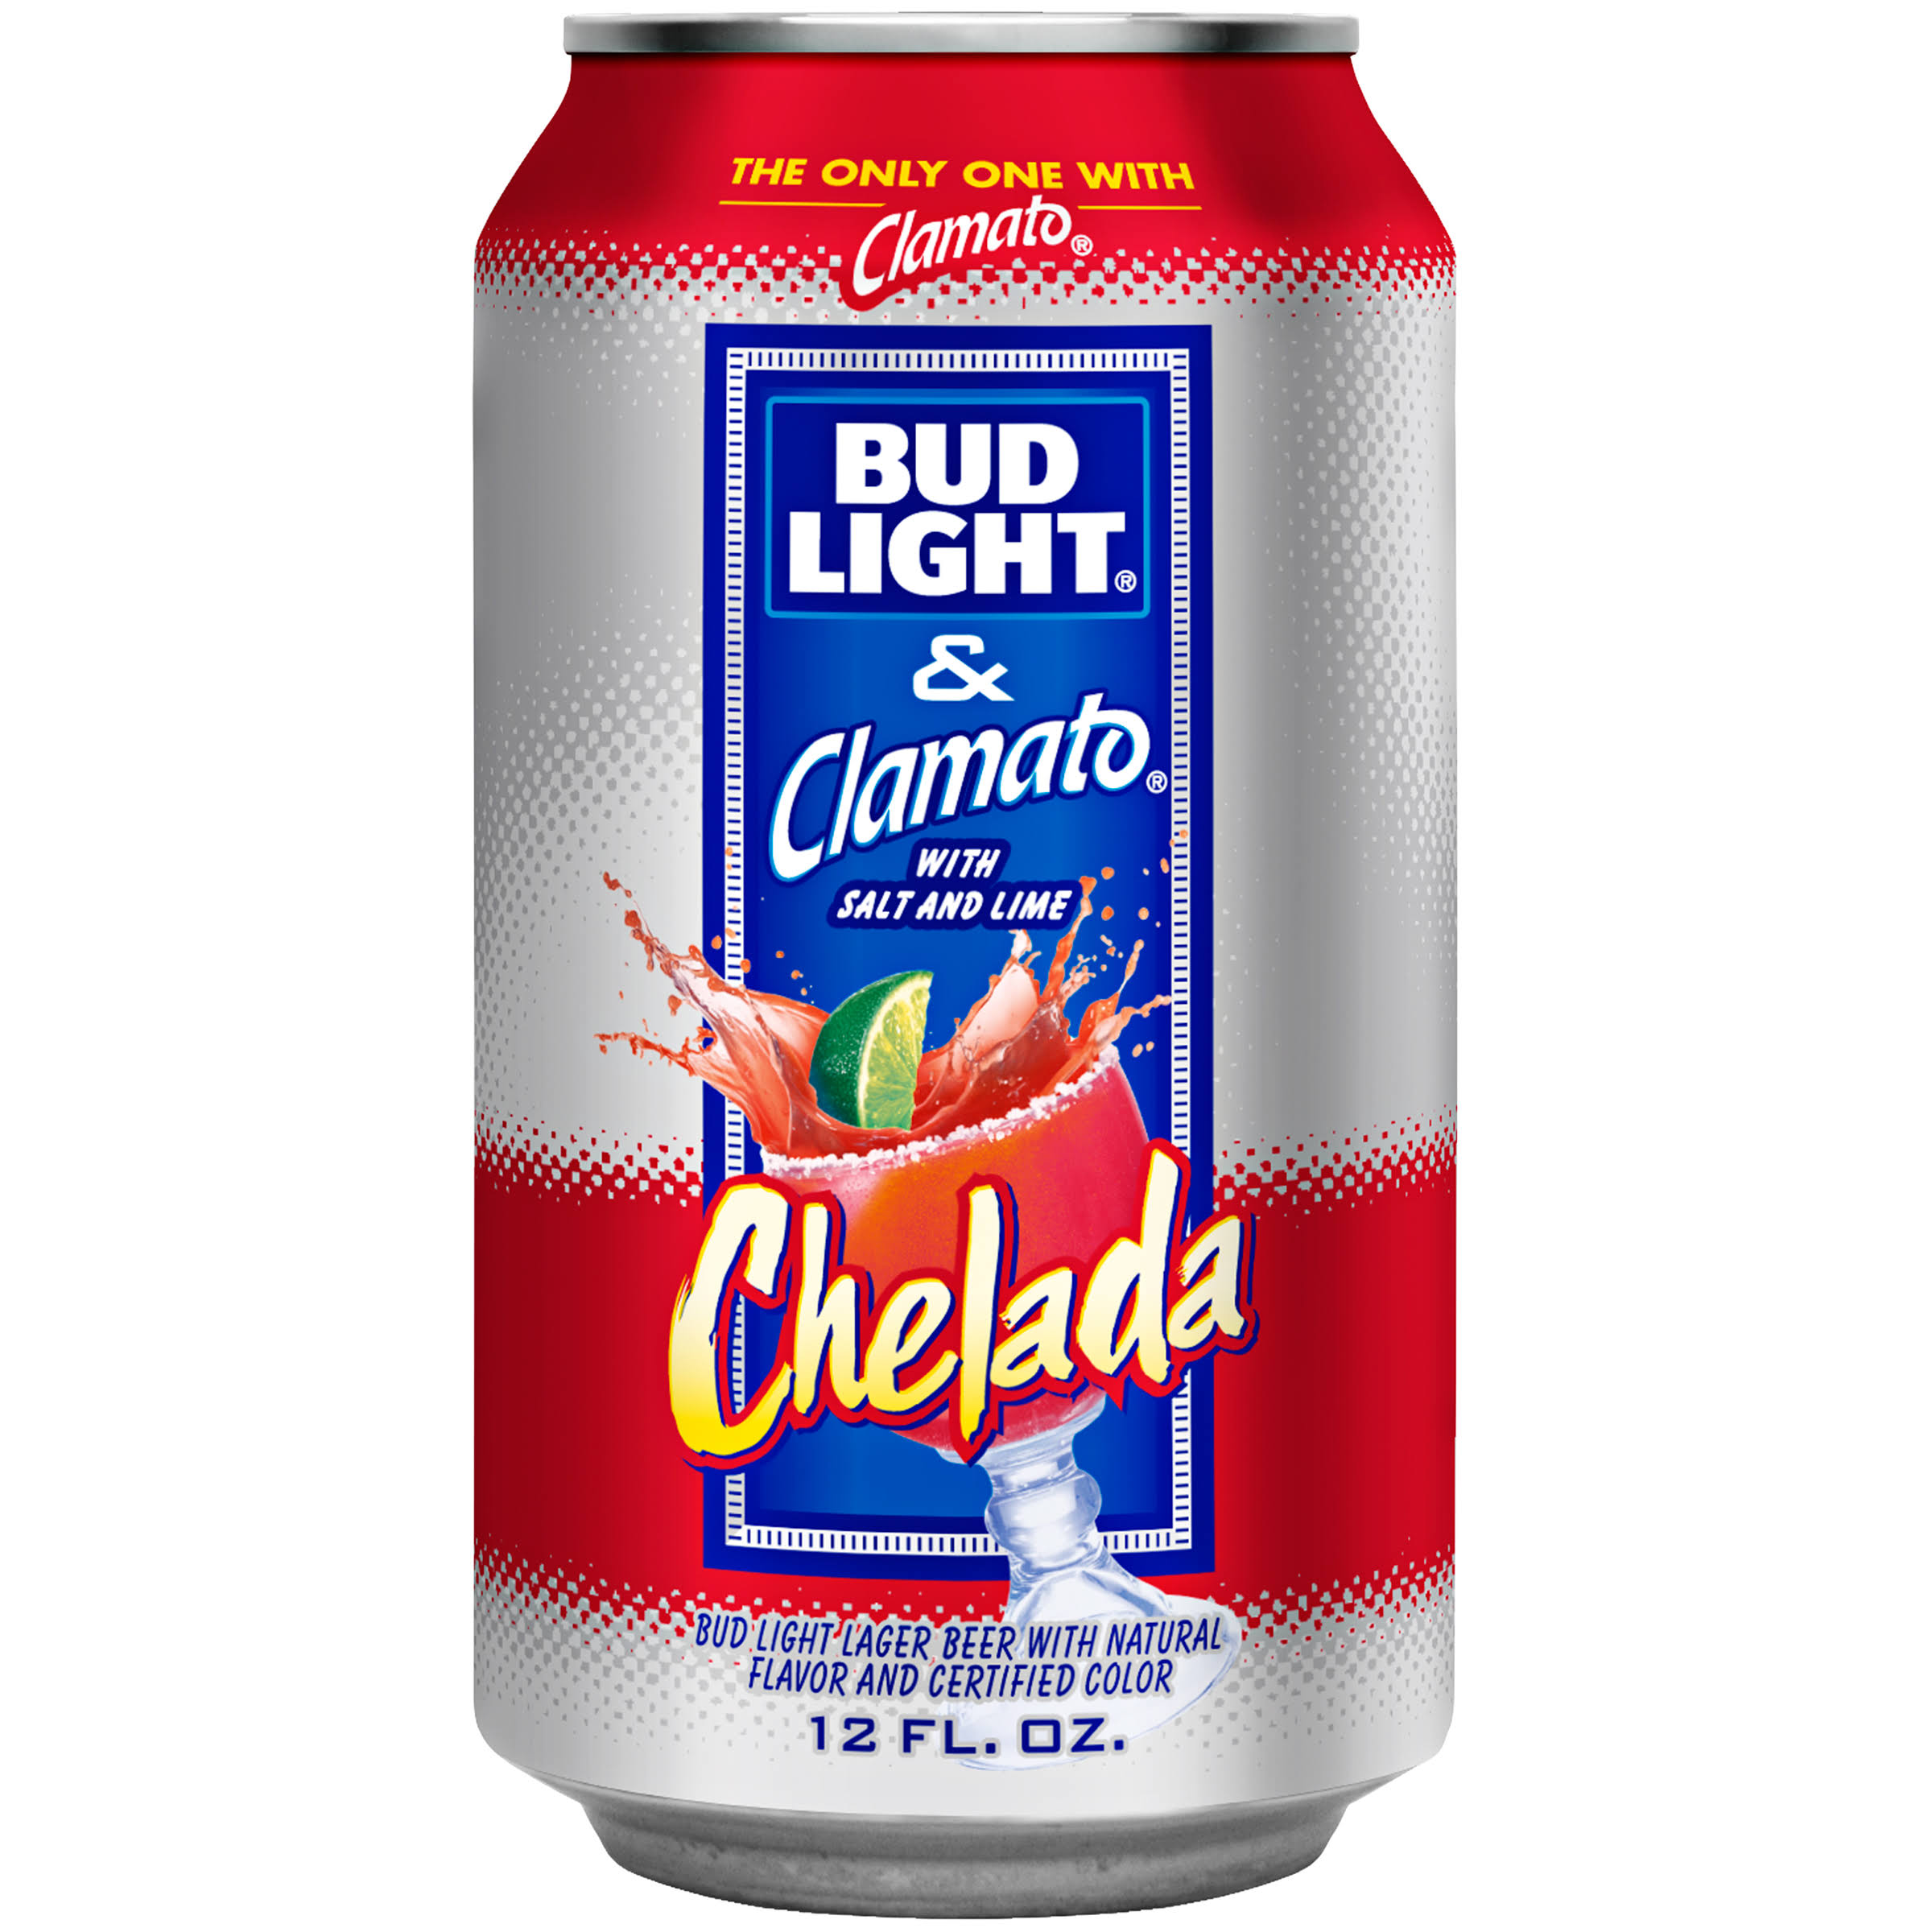 Bud Light & Clamato Chelada Beer - 6 Pack